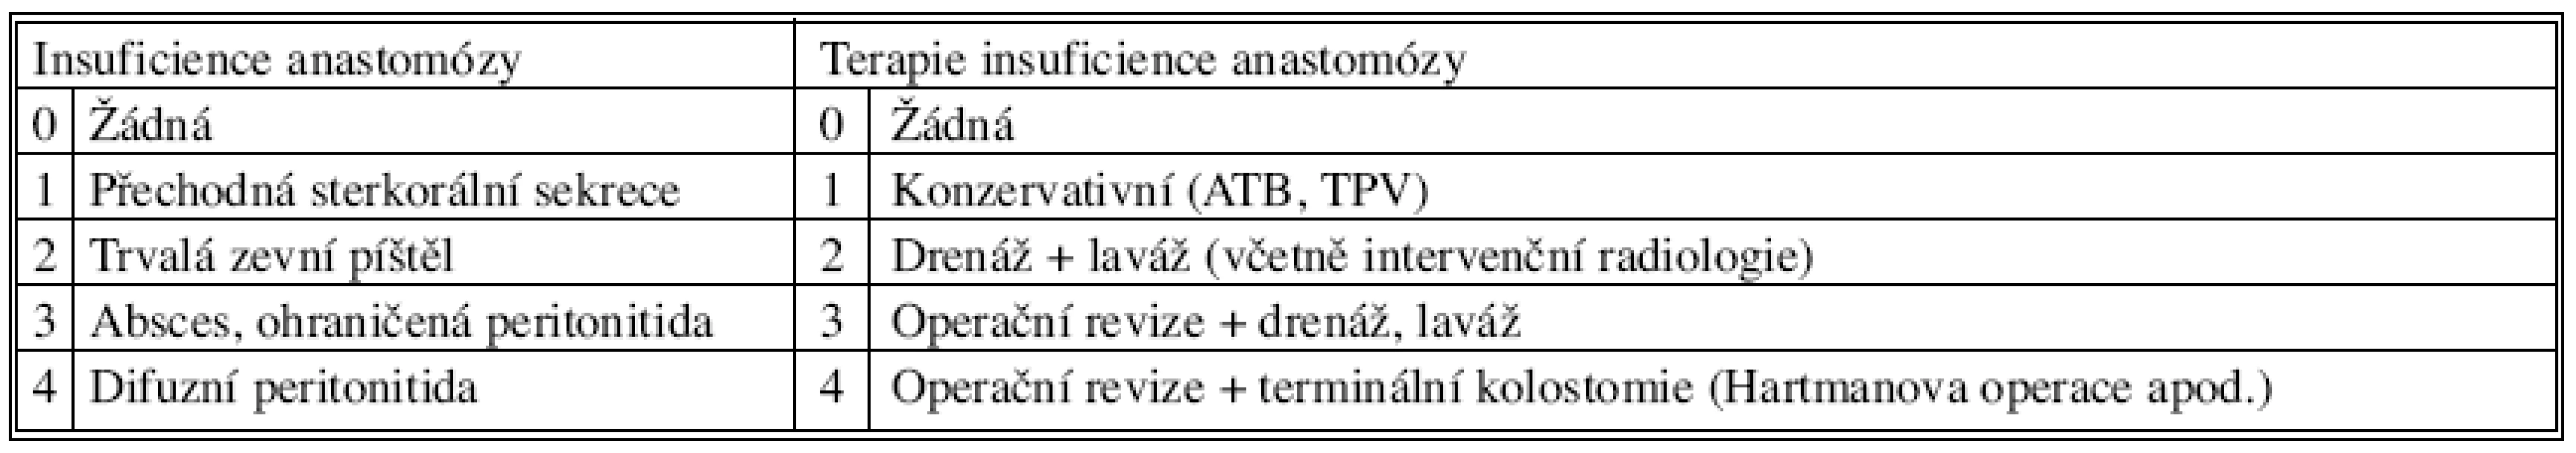 Záznam závažnosti insuficience anastomózy a její terapie
Tab. 1. Records of severity of the anastomotic insufficiency and its therapy